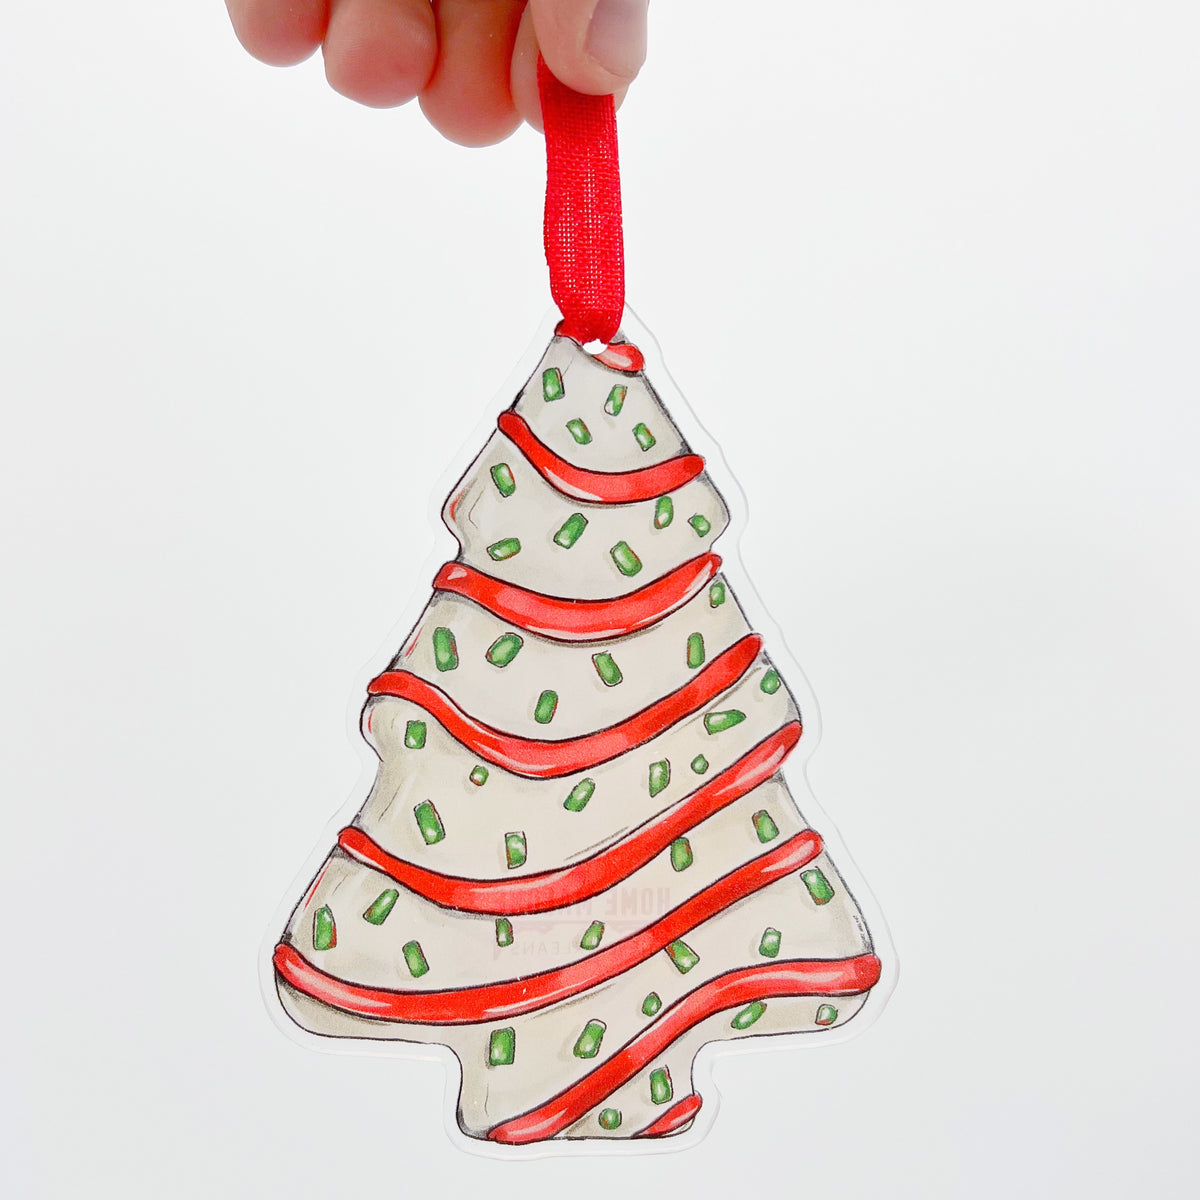 Cake Pop Christmas Ornaments - YouTube